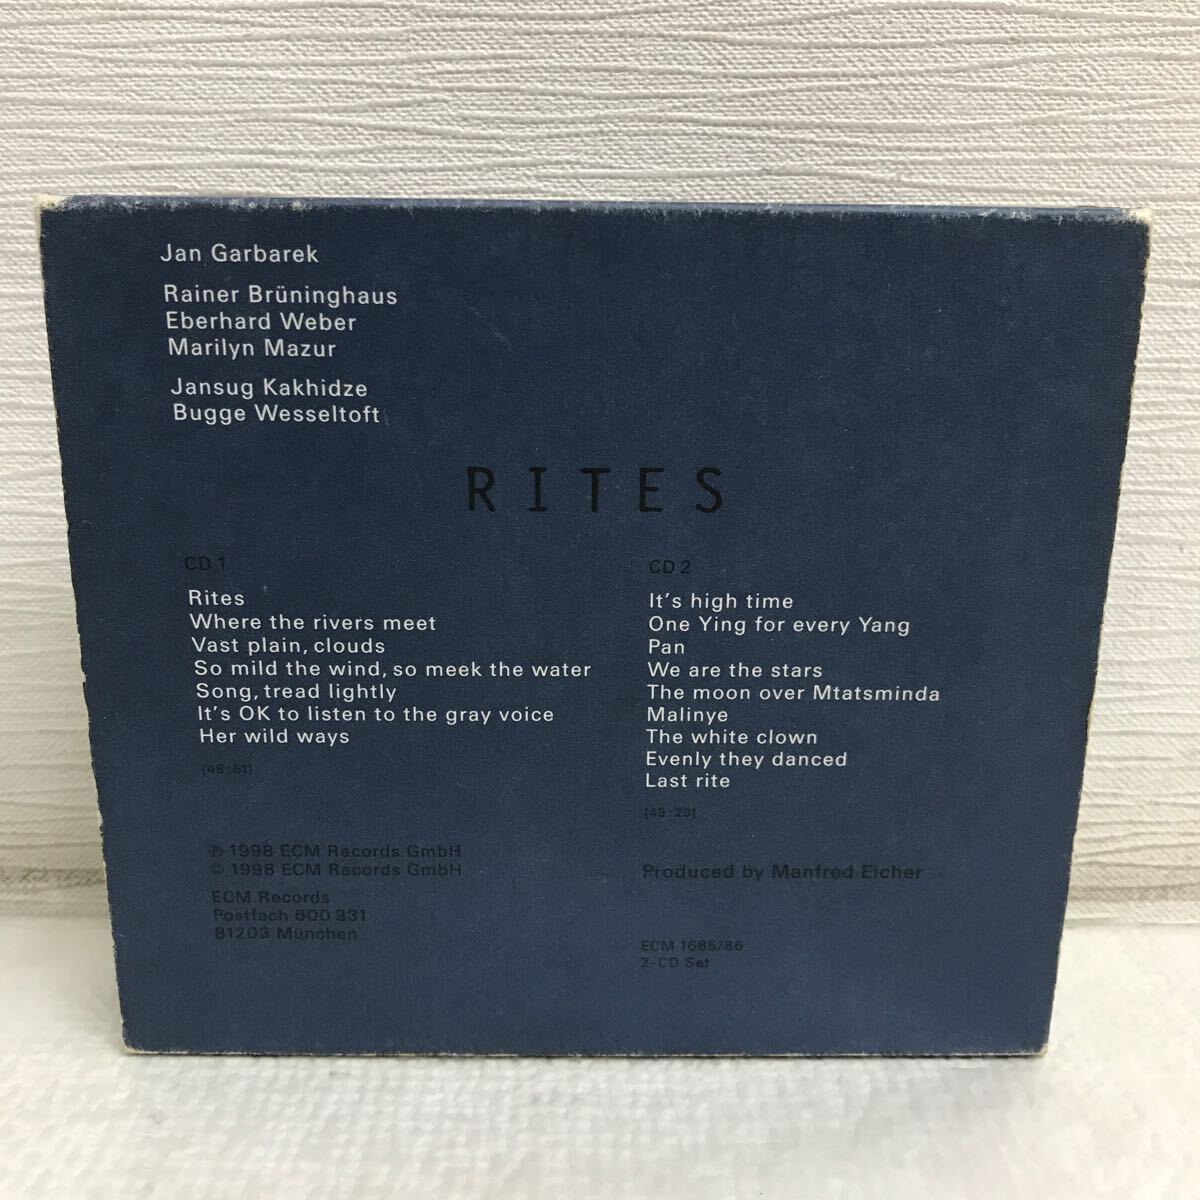 I0420A5 JAN GARBAREK RITES CD 2 листов комплект ECM 1685/86 Jazz yan*garubarek зарубежная запись Manfred Eicher Rainer Bruninghaus